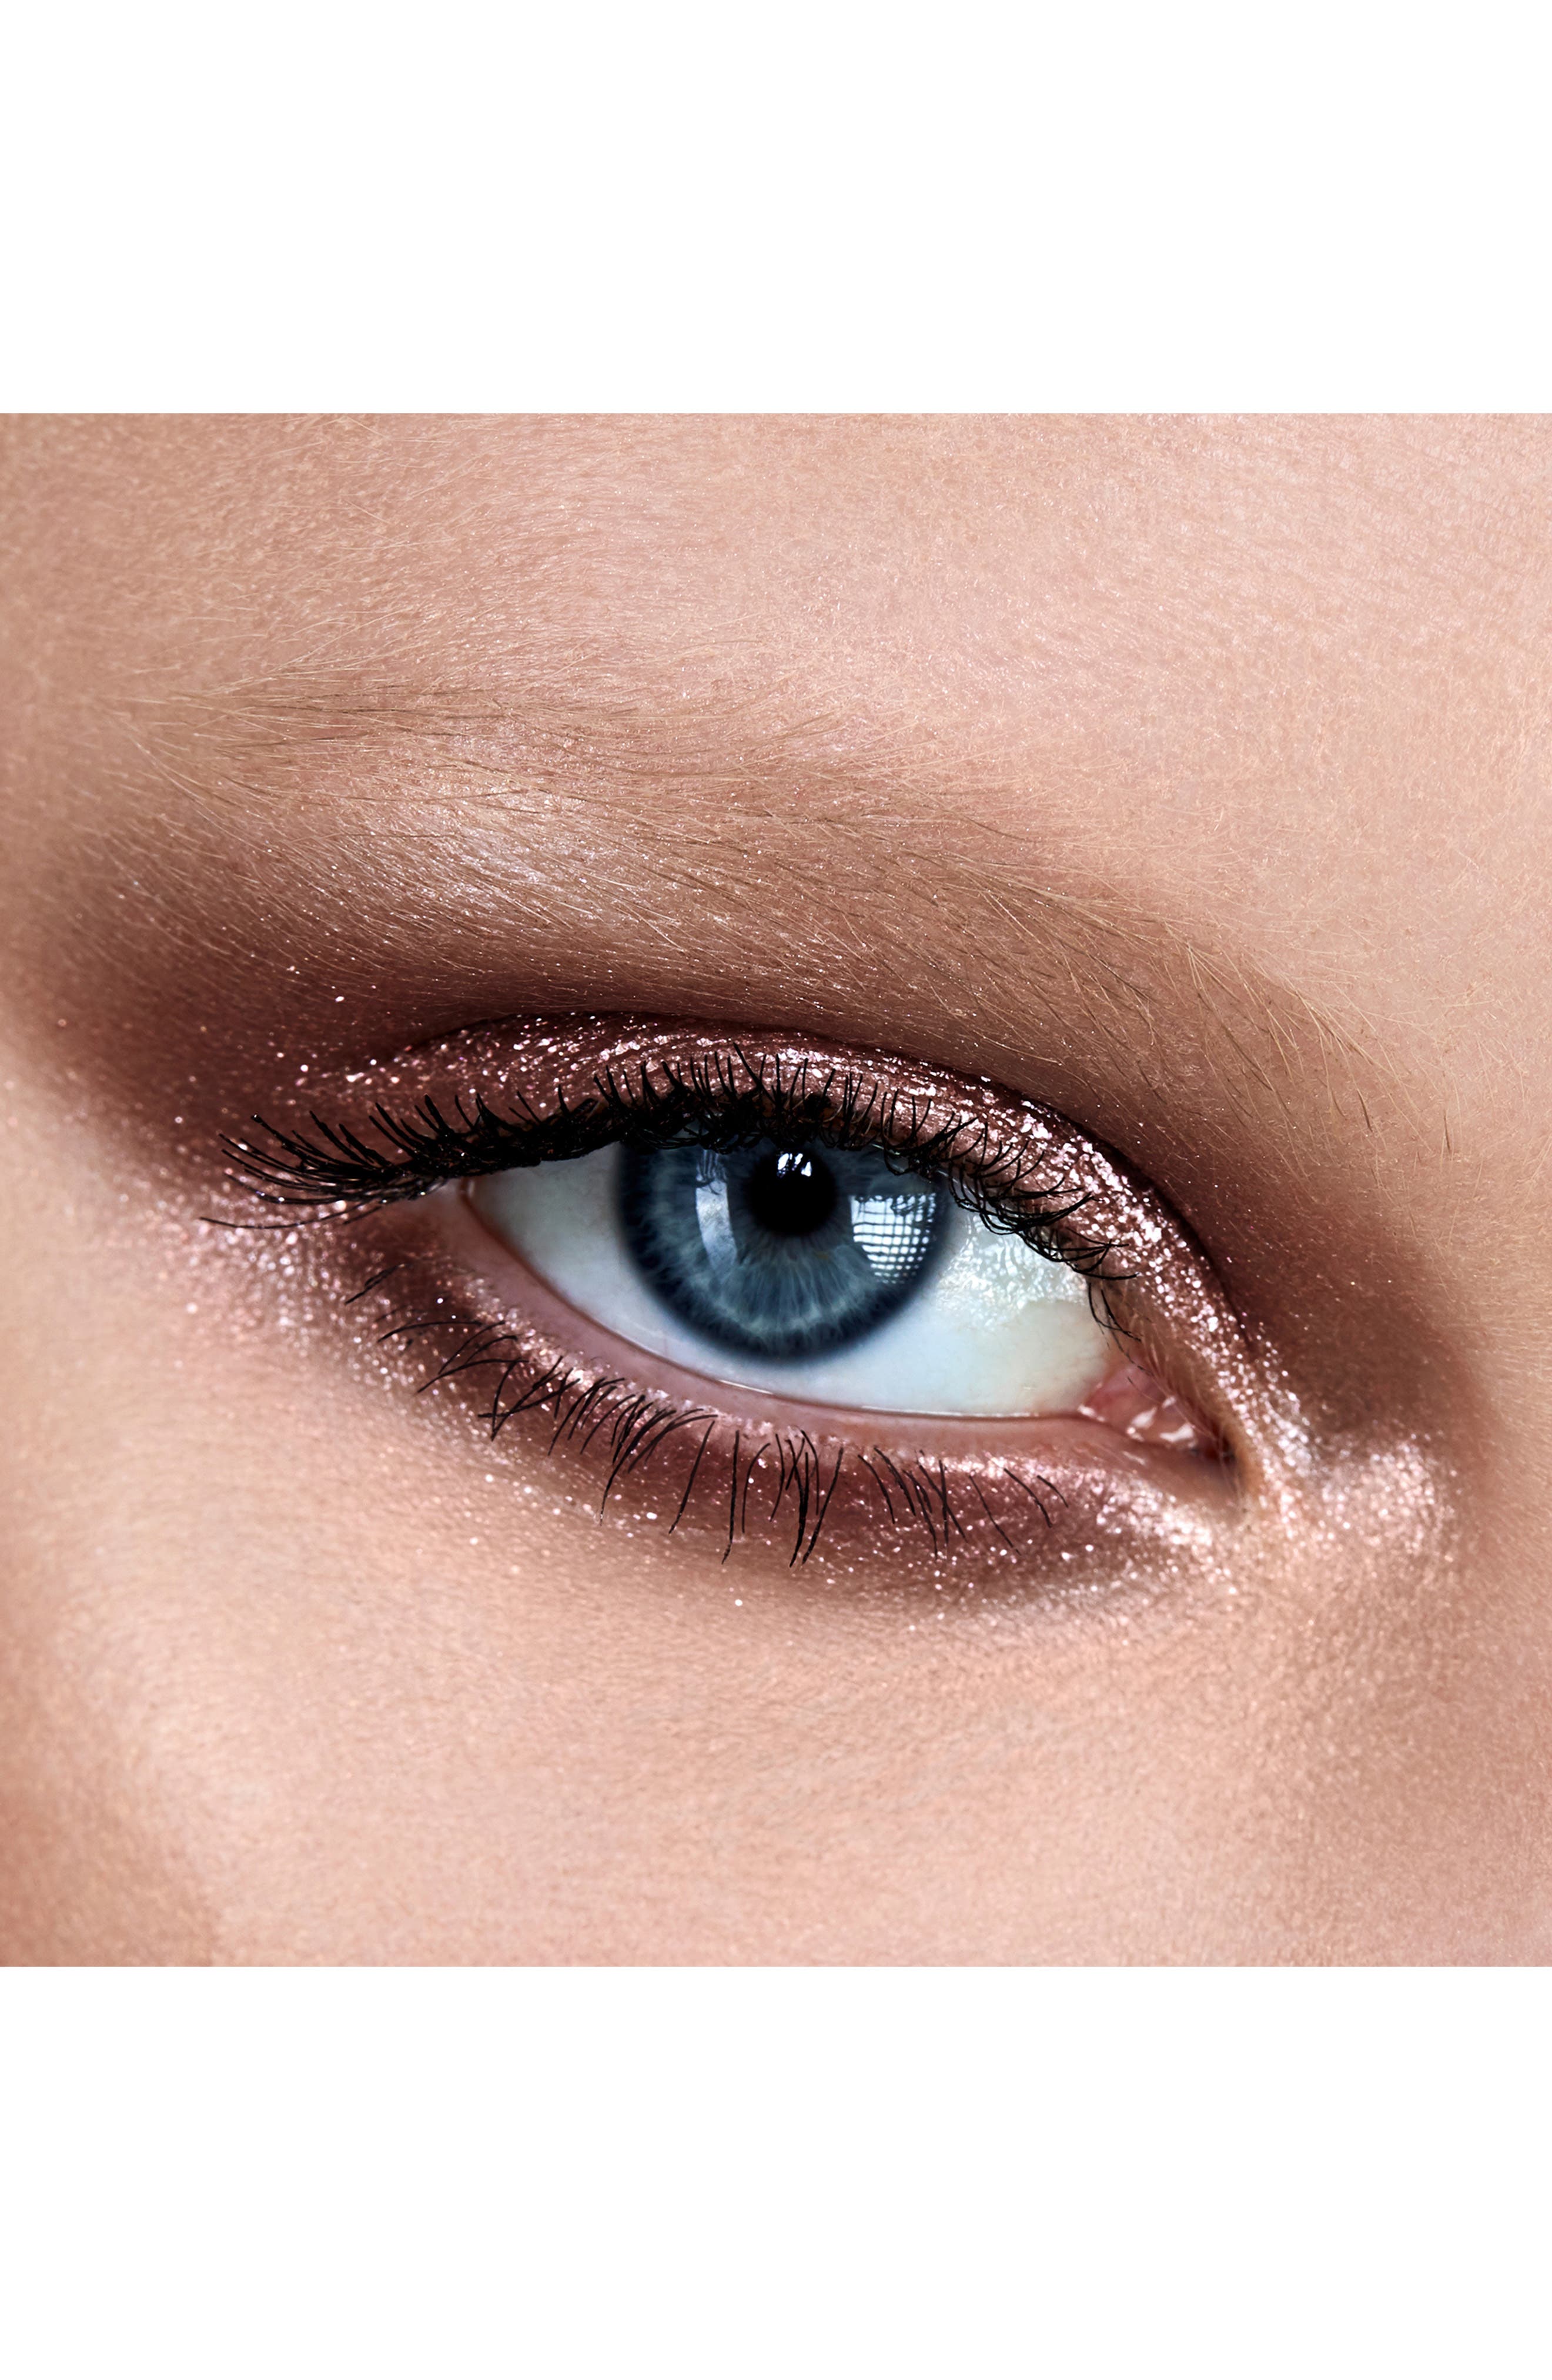 12 Best Glitter Eyeshadows of 2019 - How to Apply Glitter Eyeshadow